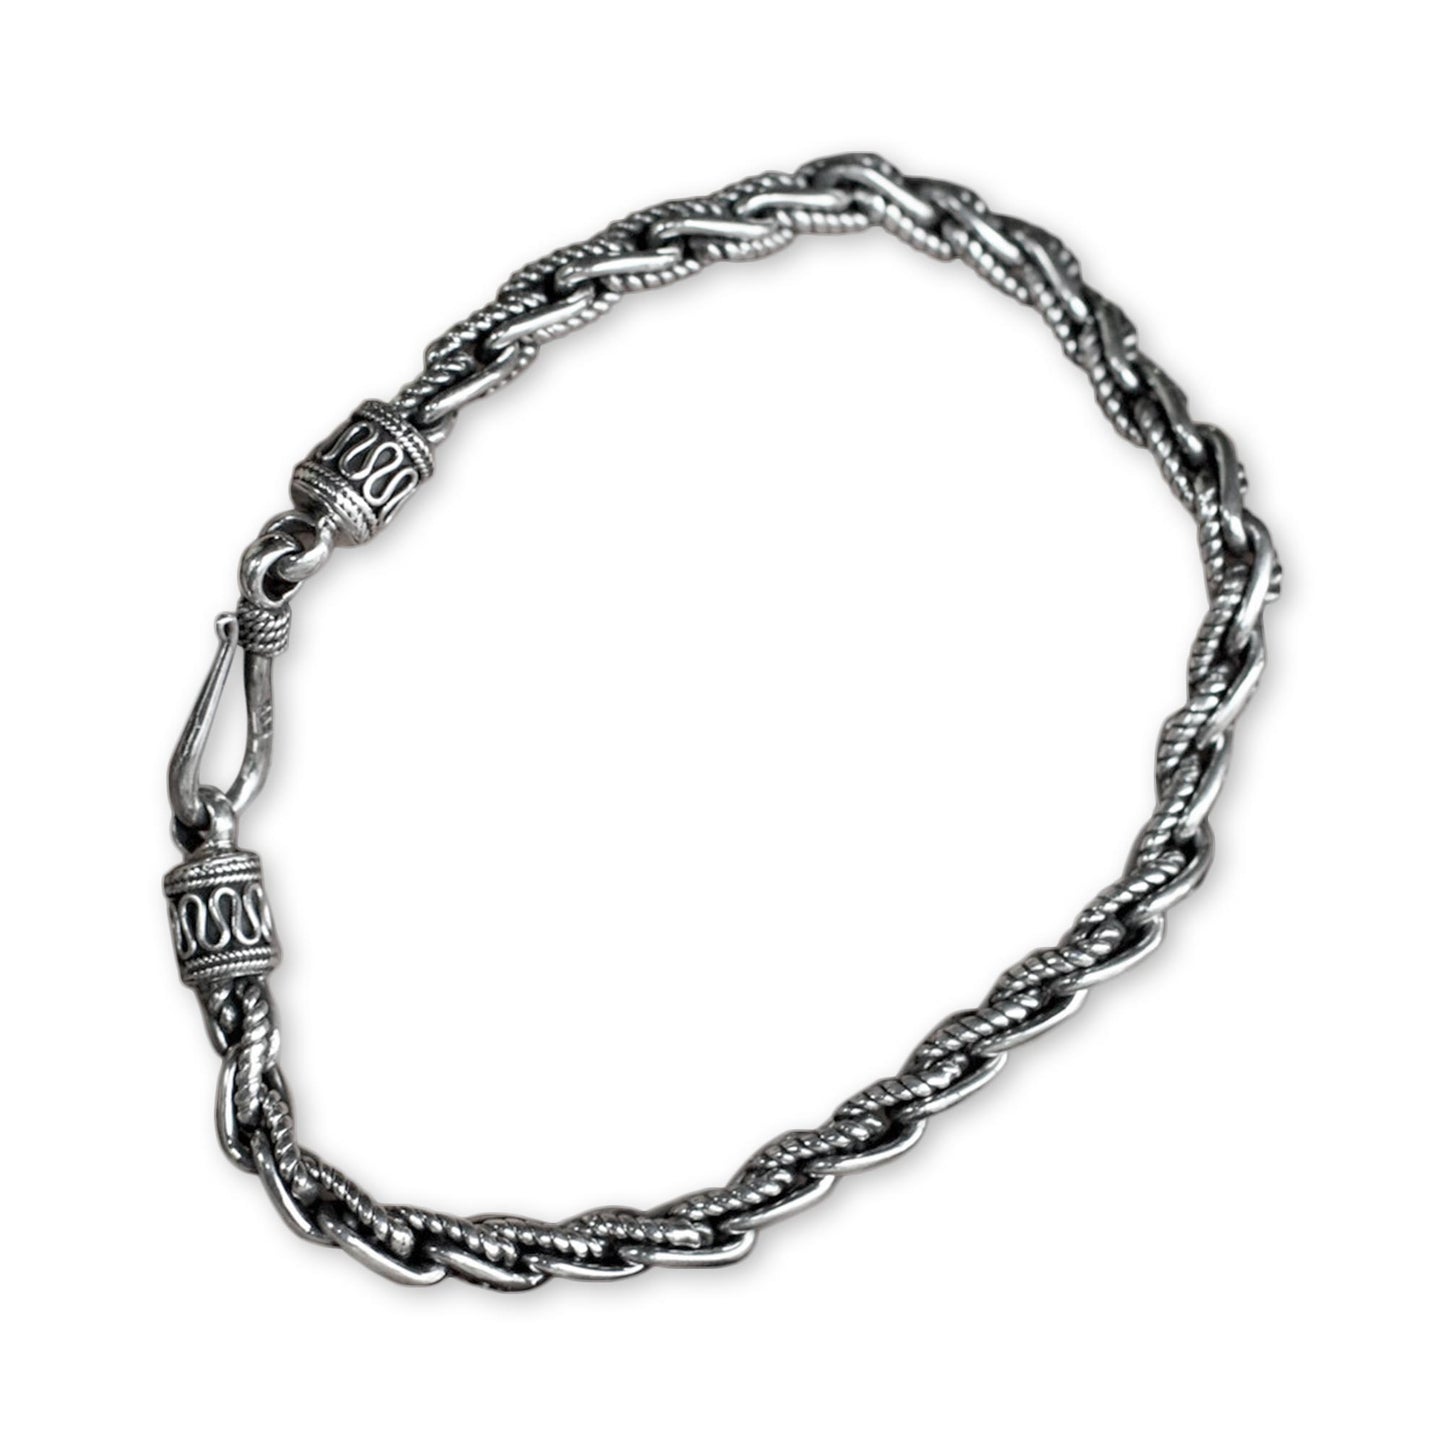 Flowing River Men's Sterling Silver Chain Bracelet